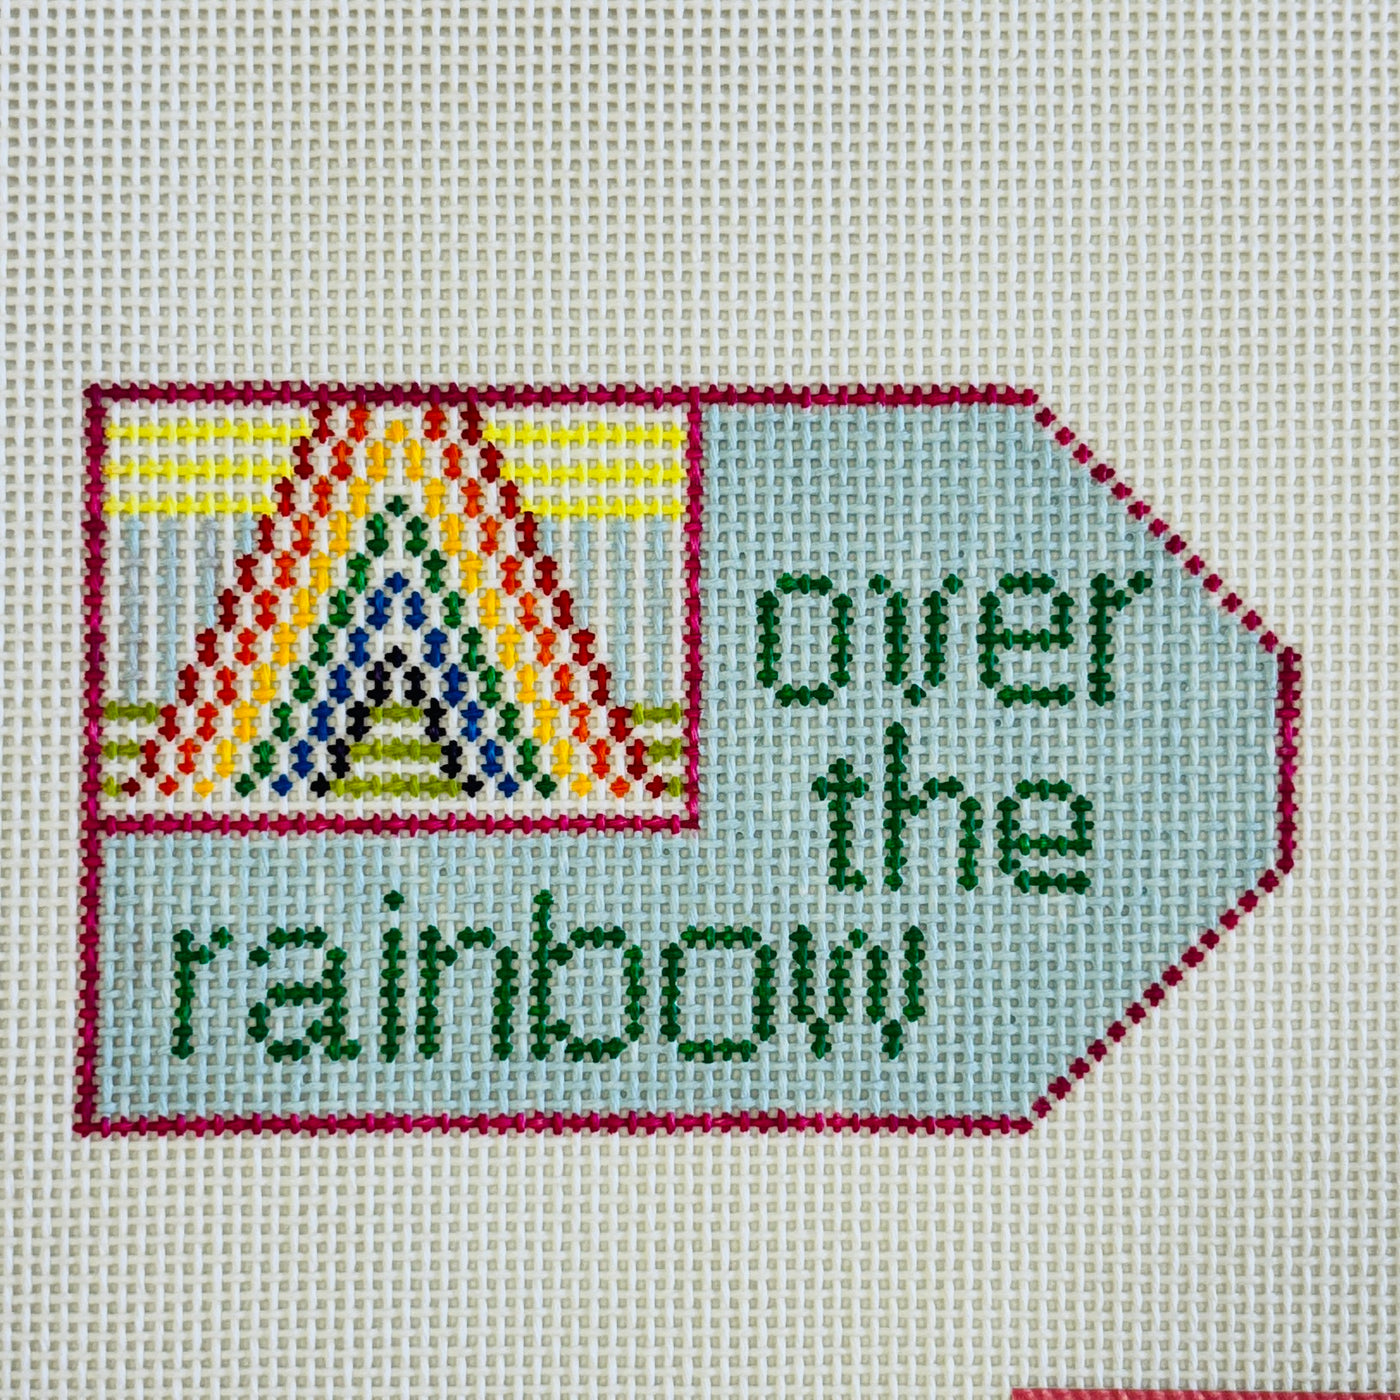 Over the Rainbow Tag Needlepoint Canvas